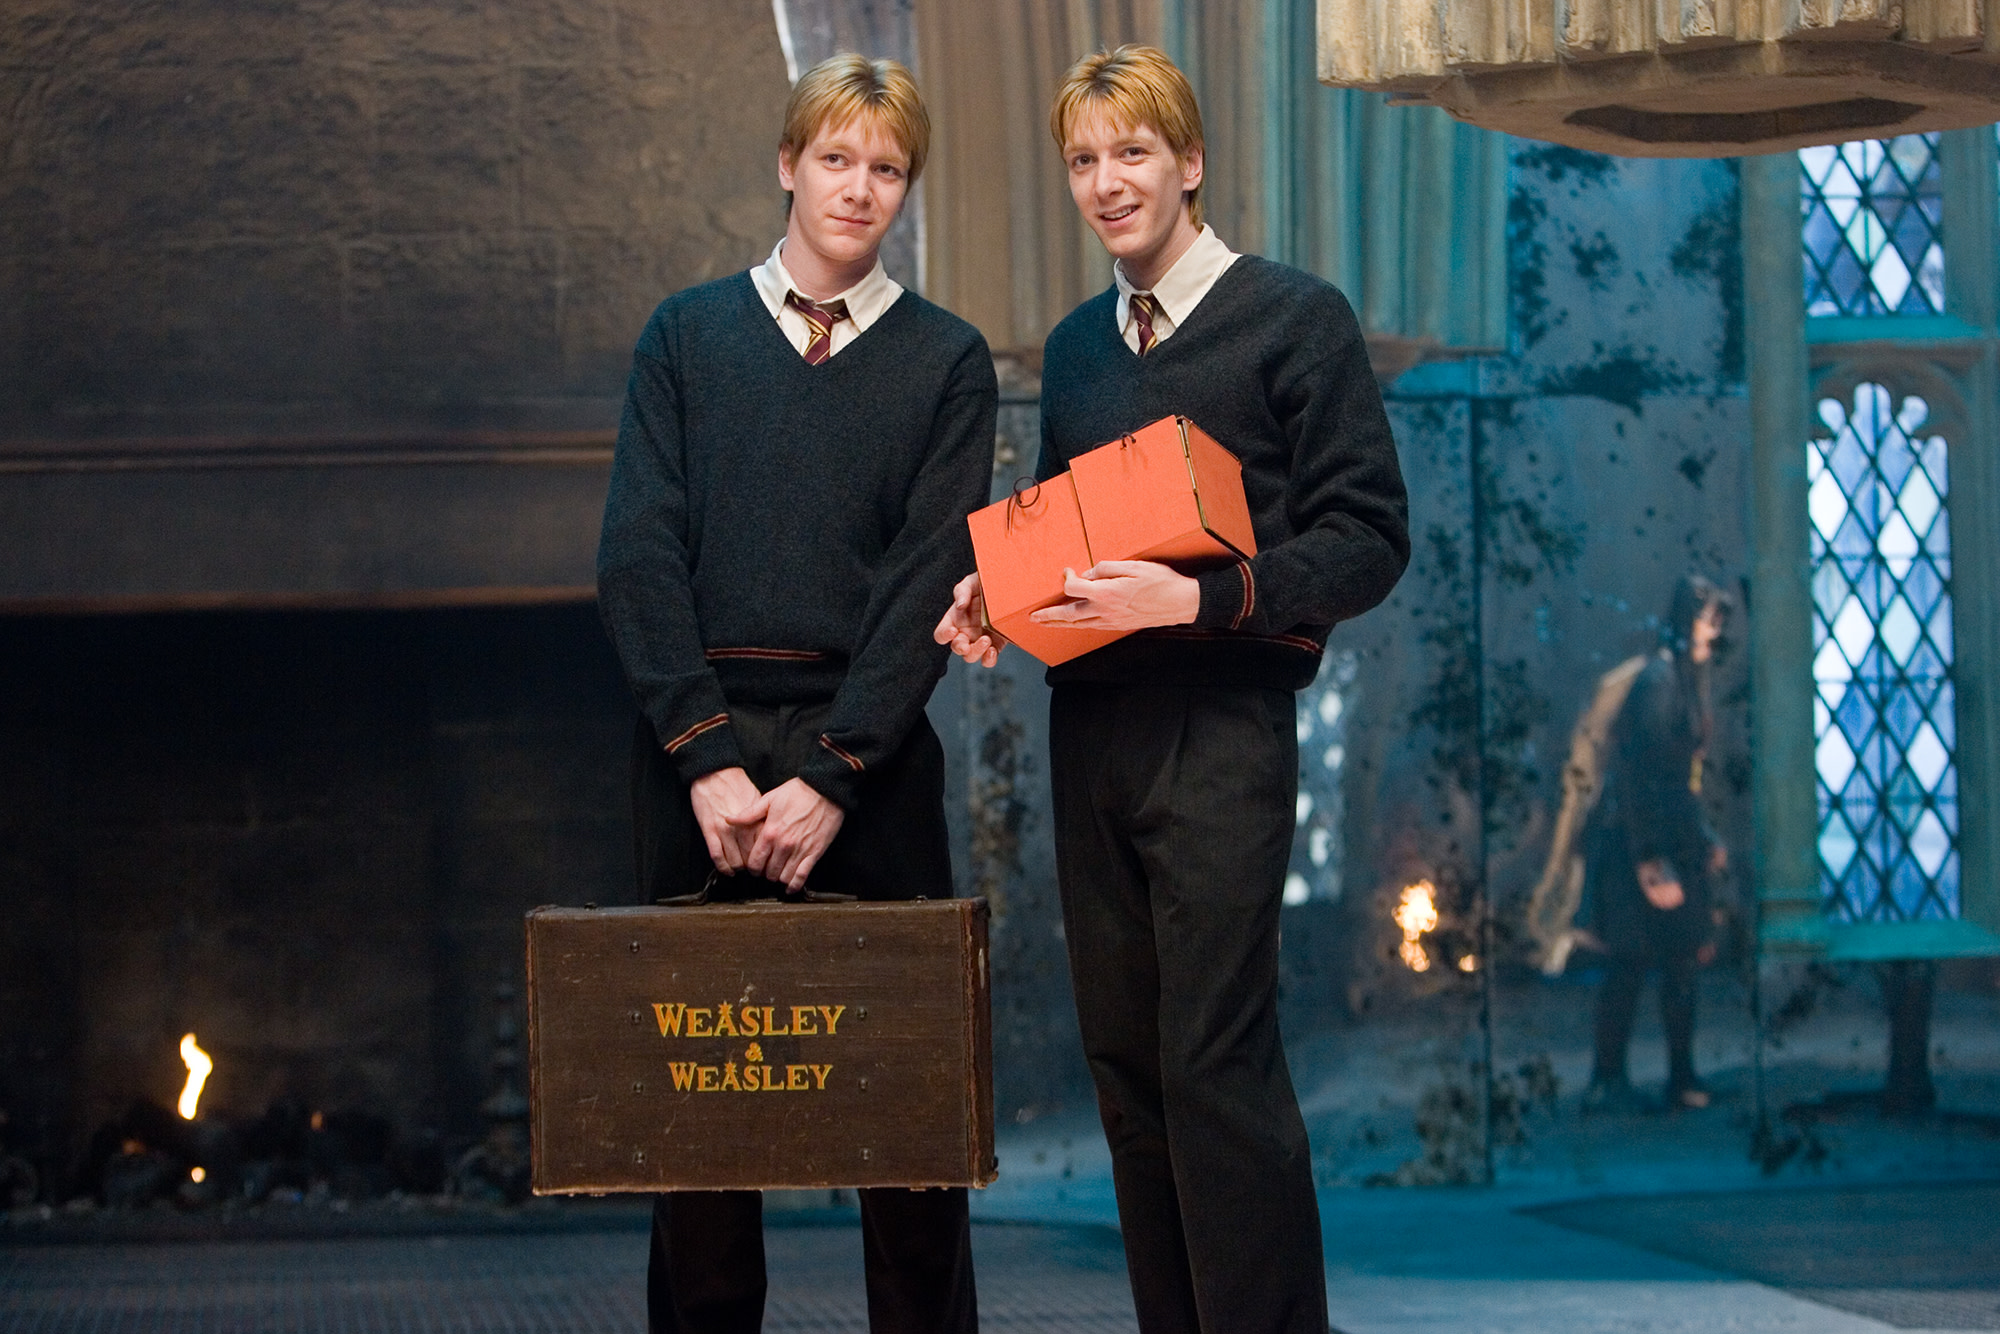 Weasleys' Wizard Wheezes